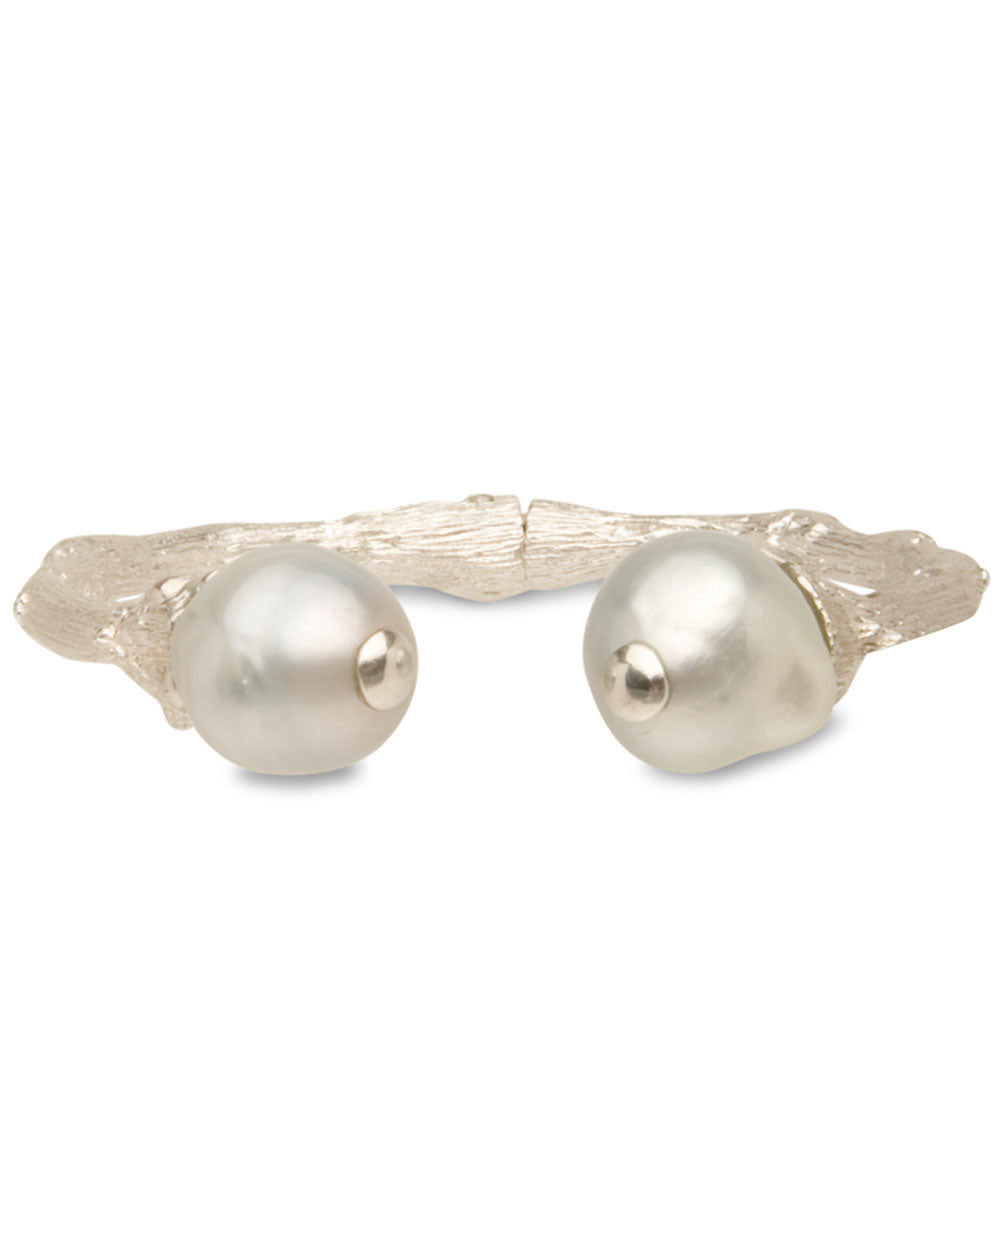 Twig Cuff with South Sea Pearls